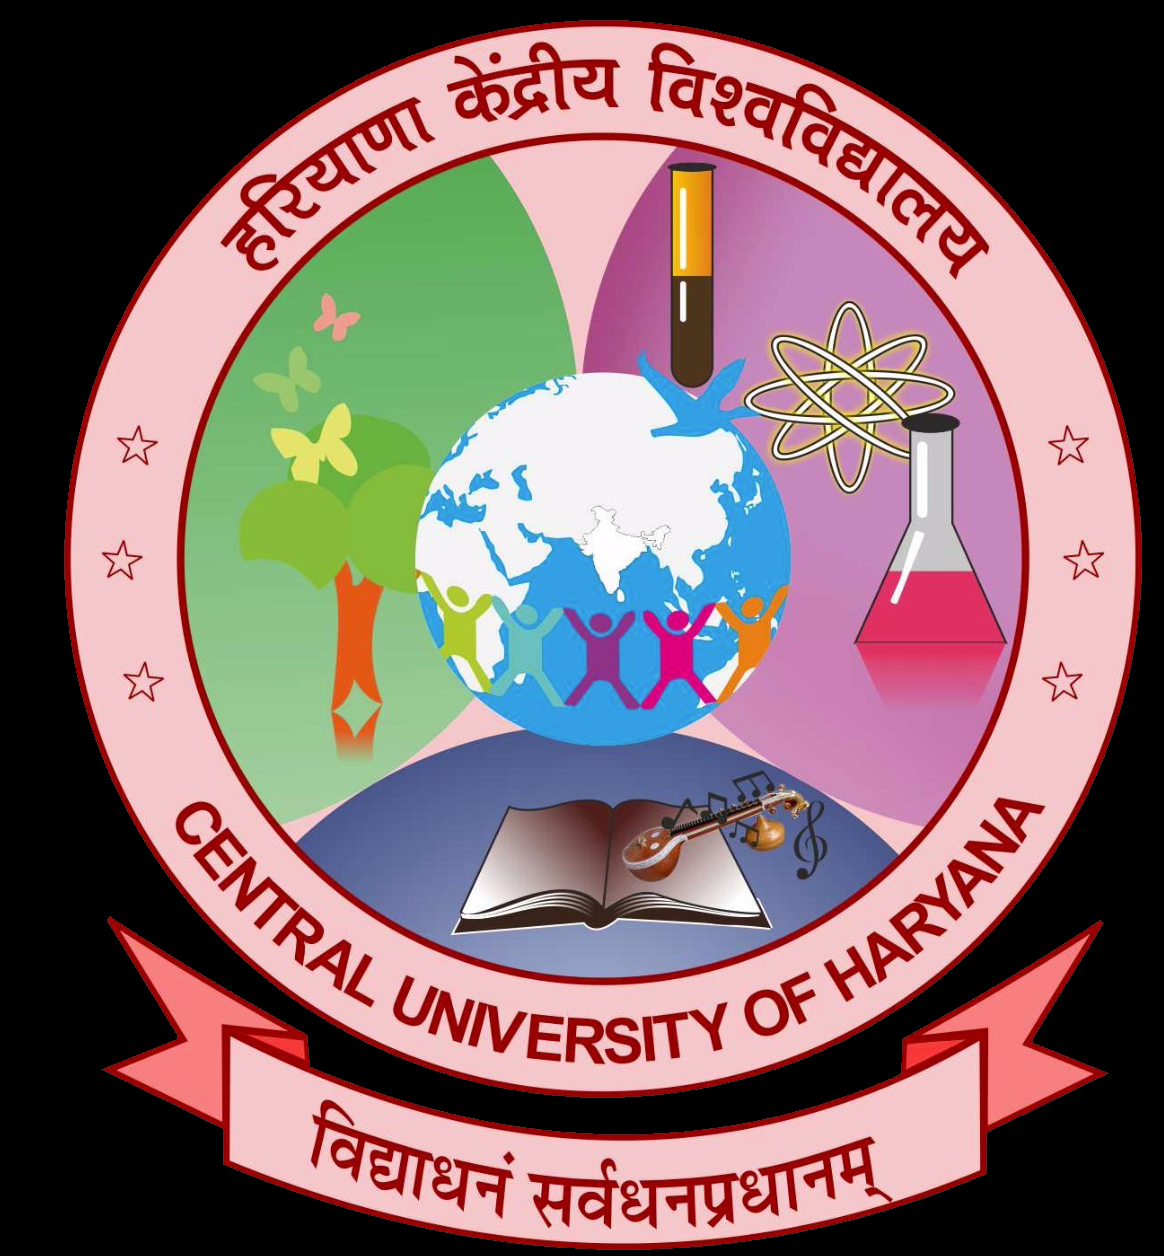 Central University of Haryana, Mohindergarh